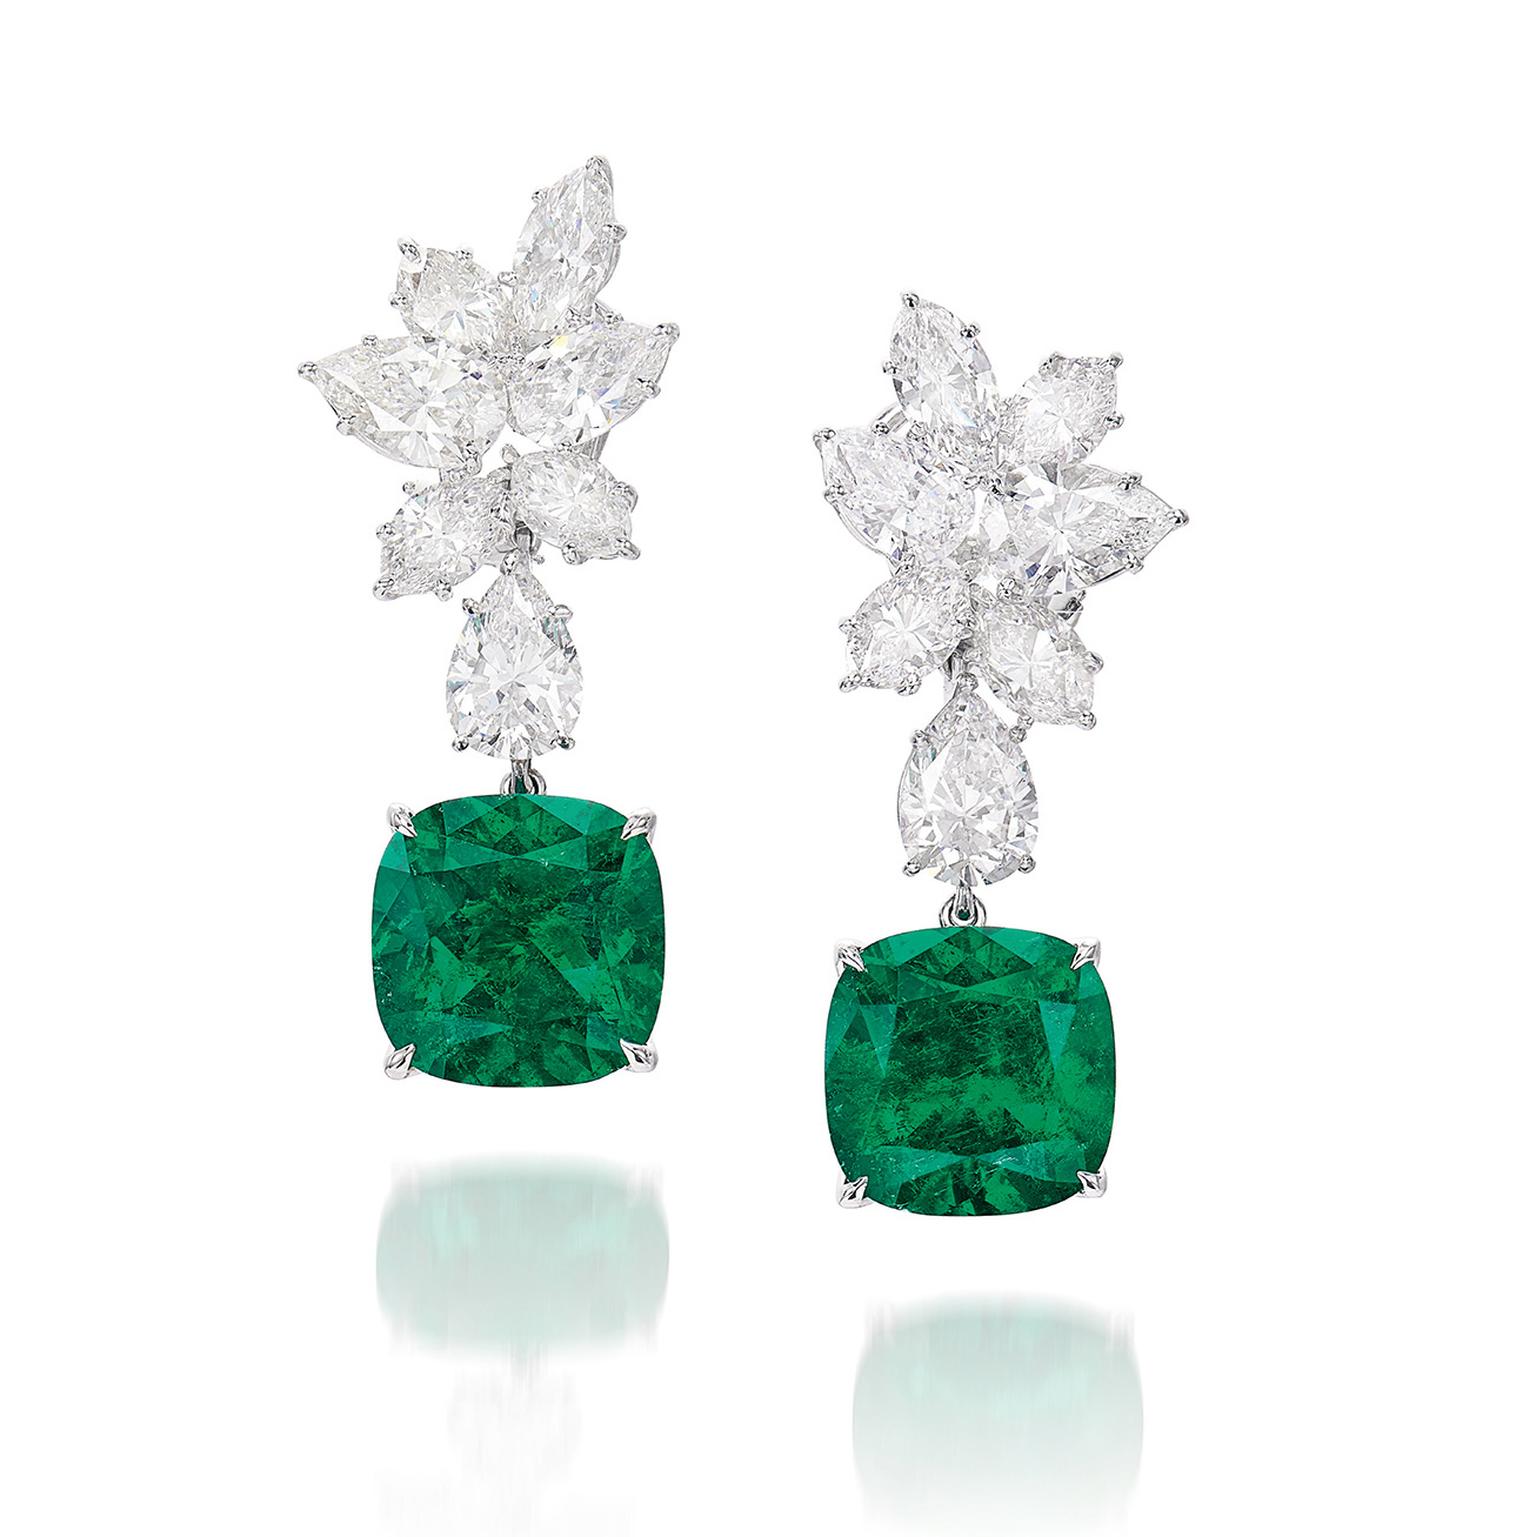 Lot 612 - Emerald earrings by Harry Winston- Phillips Auction 5 June 2021